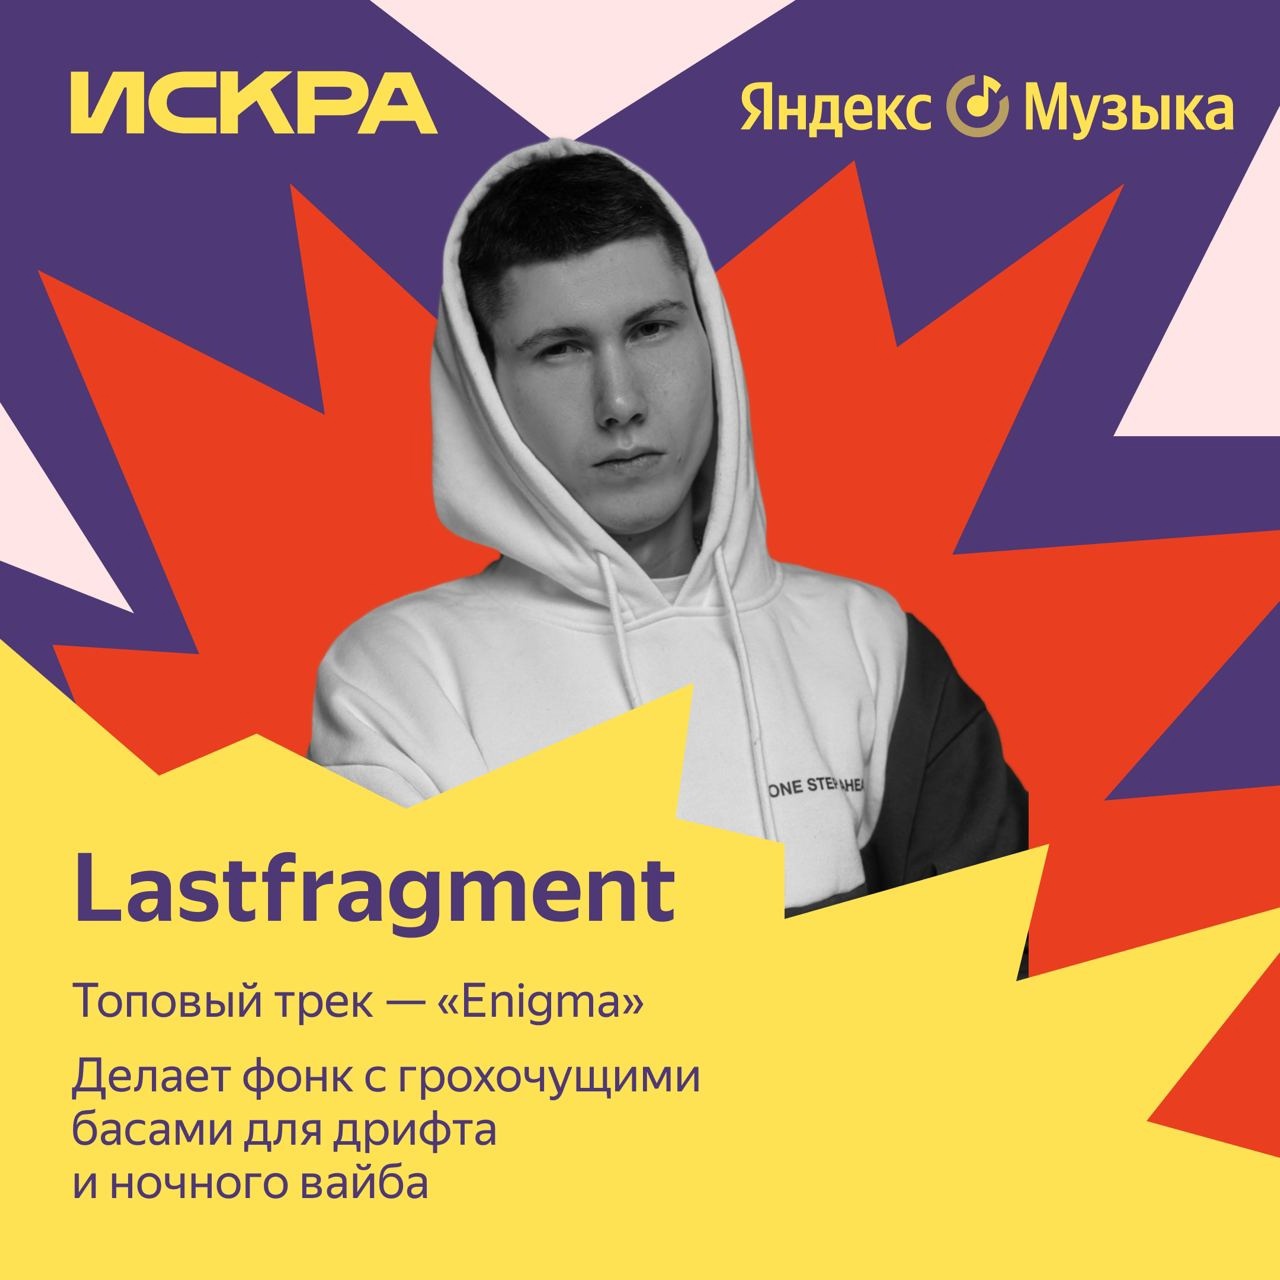 Lastfragment и Real Girl — новые герои плейлиста «Искра» на Яндекс Музыке.